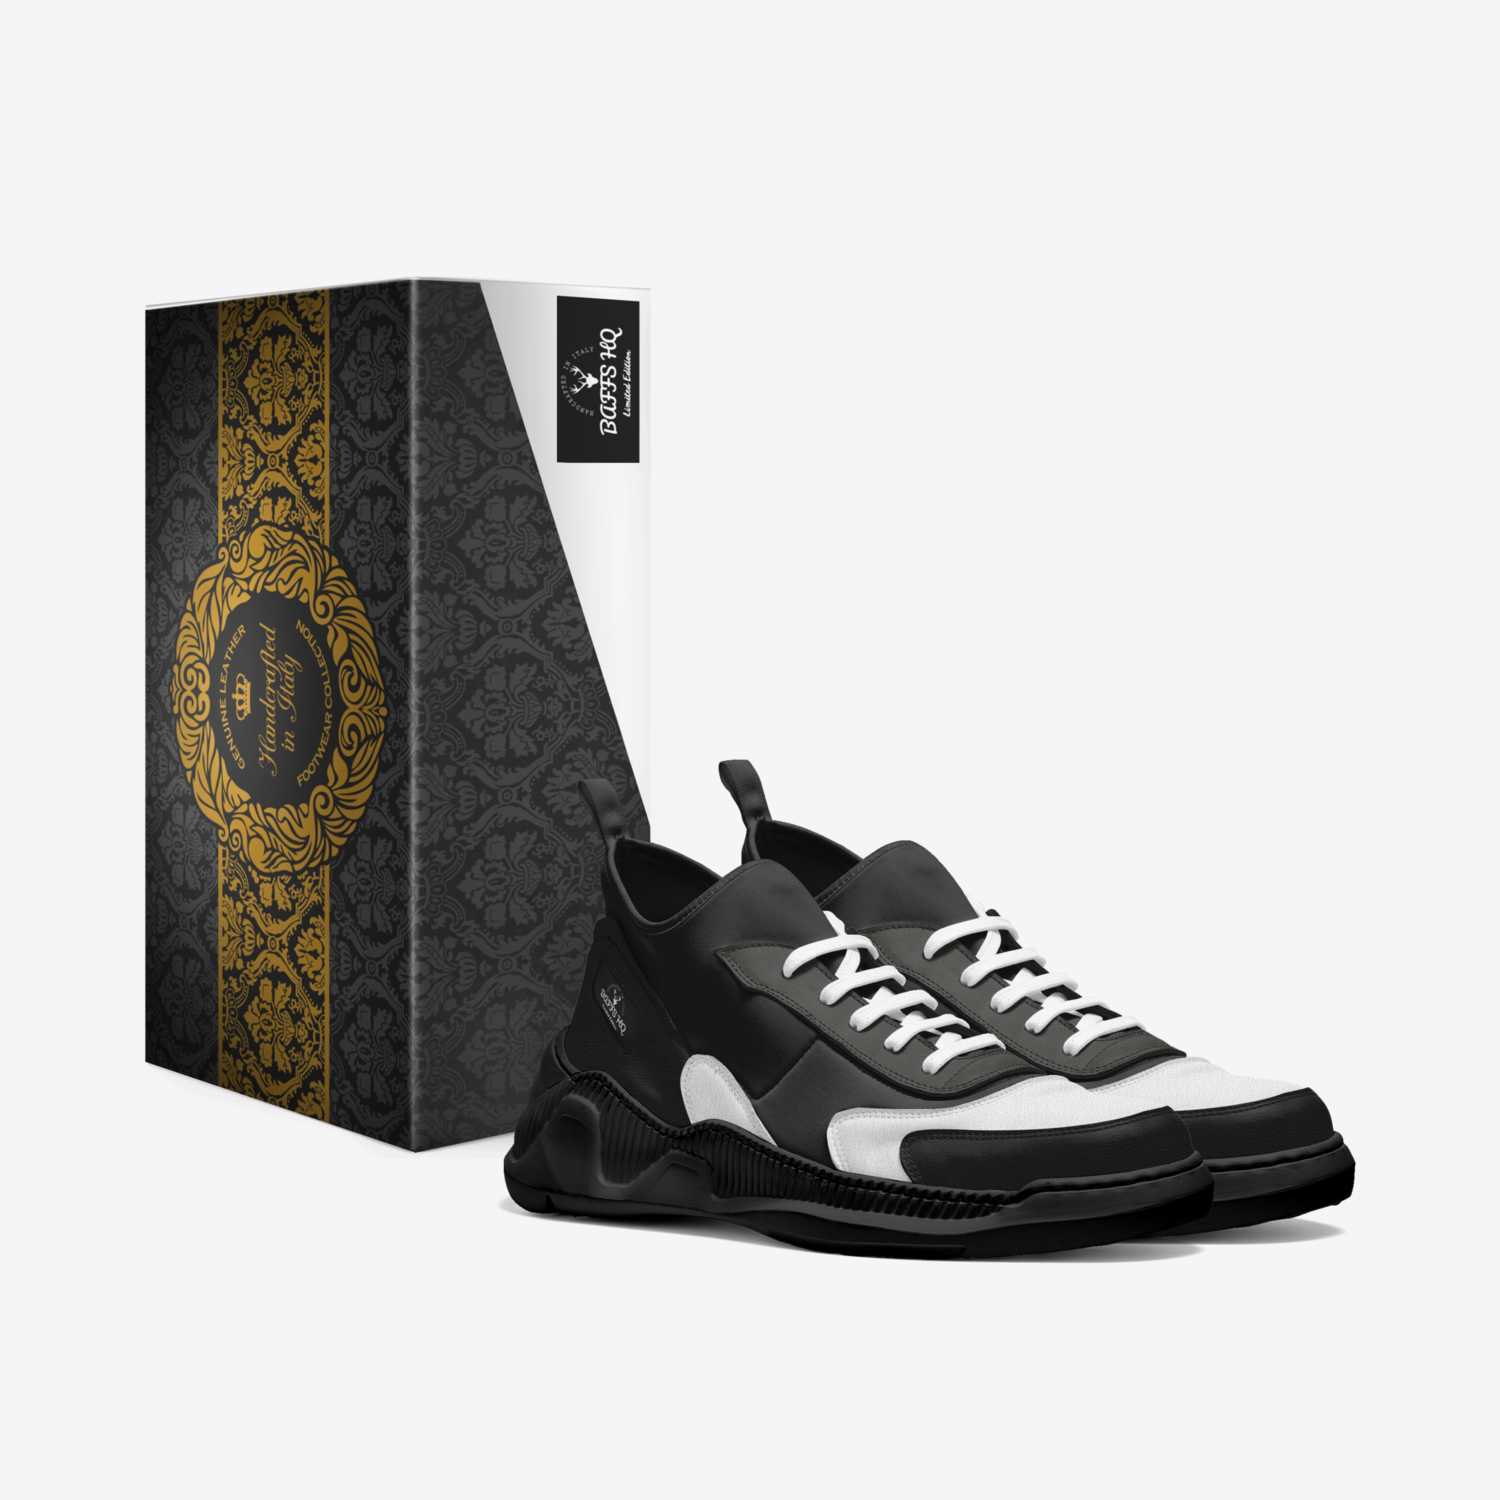 BAFFS HQ custom made in Italy shoes by Luca Onyebueke | Box view